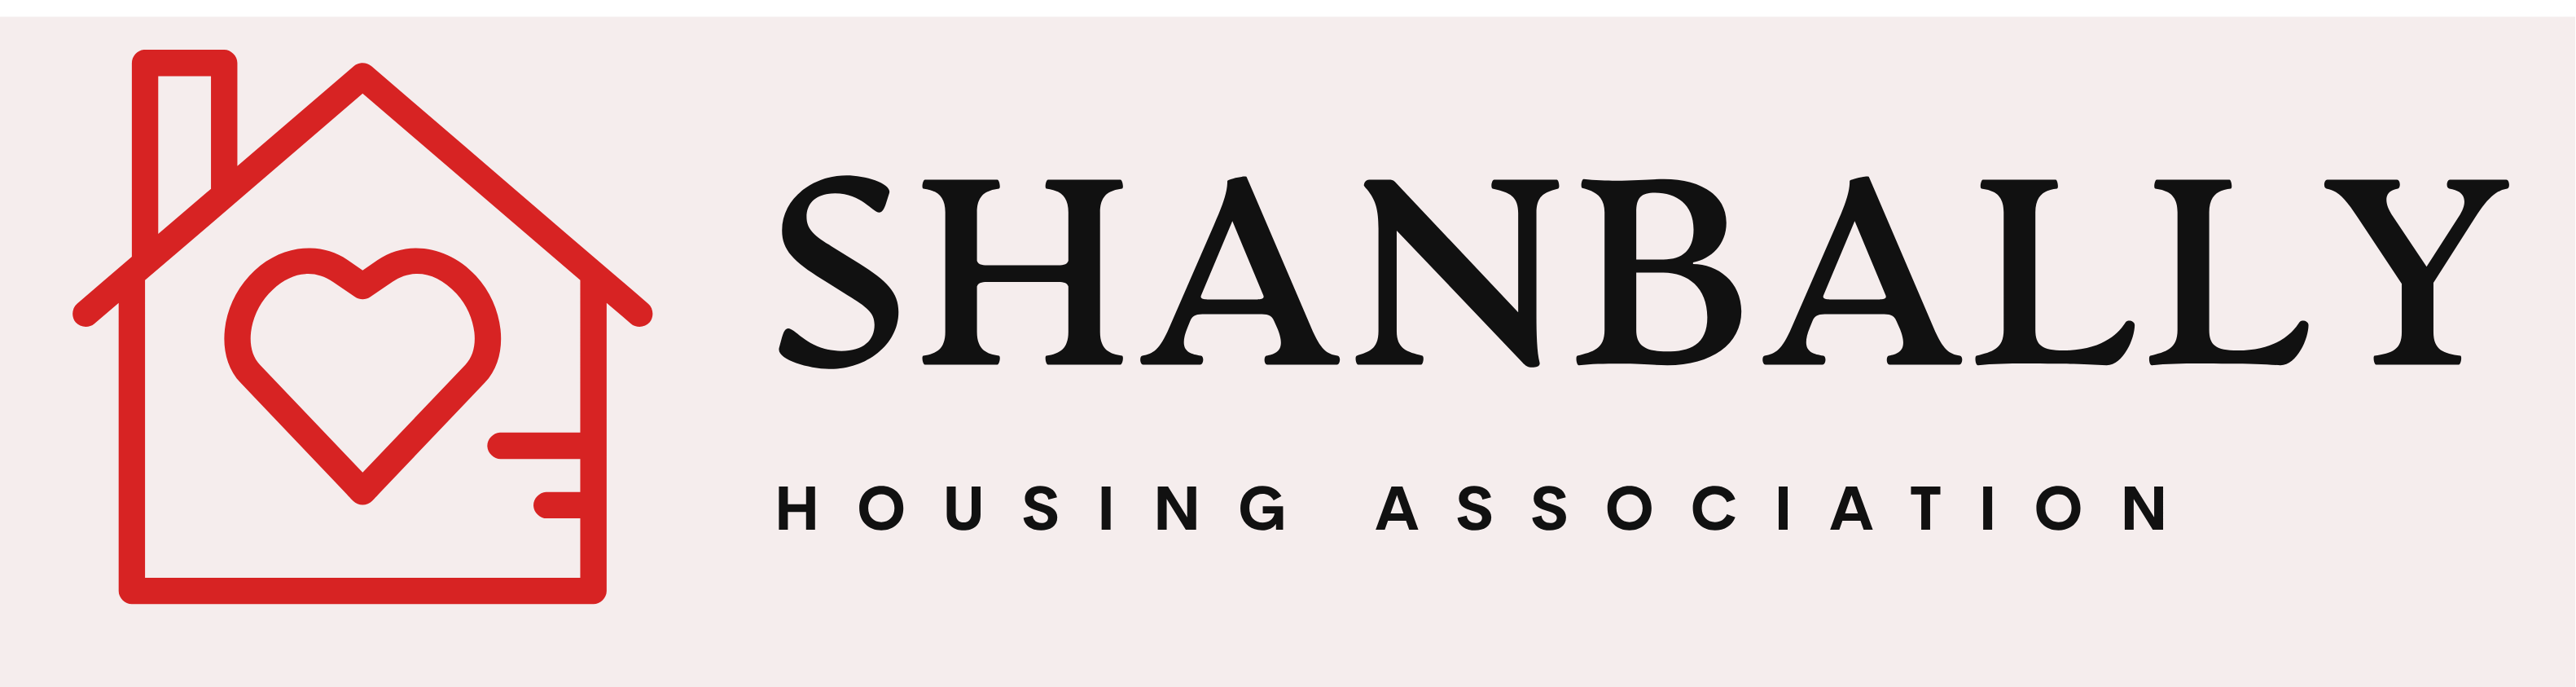 Shanbally Housing Association